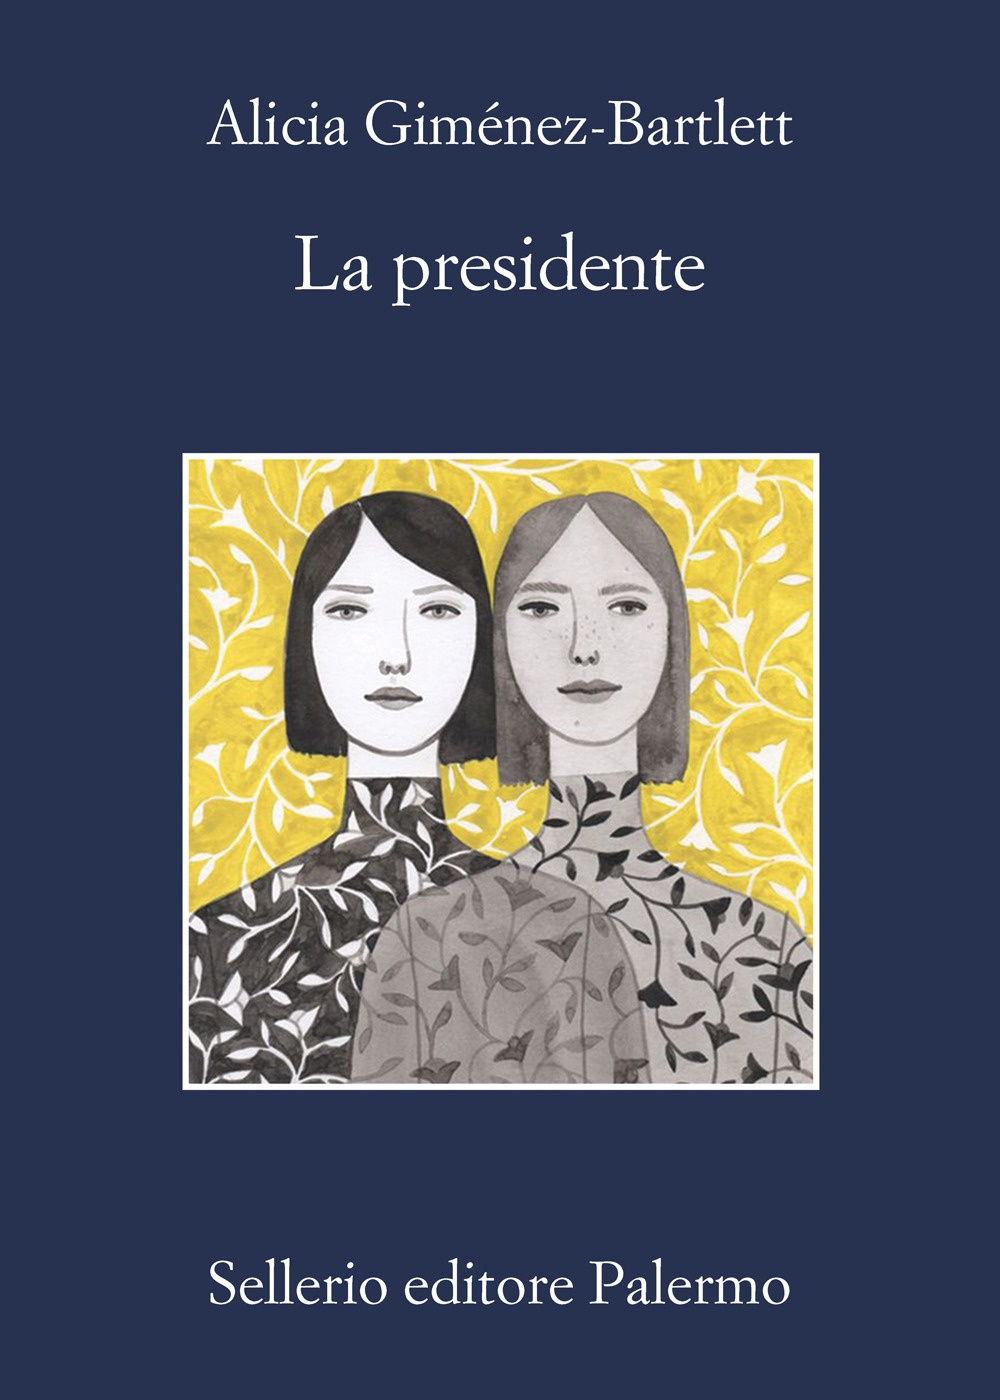 La presidente - Alicia Giménez-Bartlett - Sellerio Editore Palermo